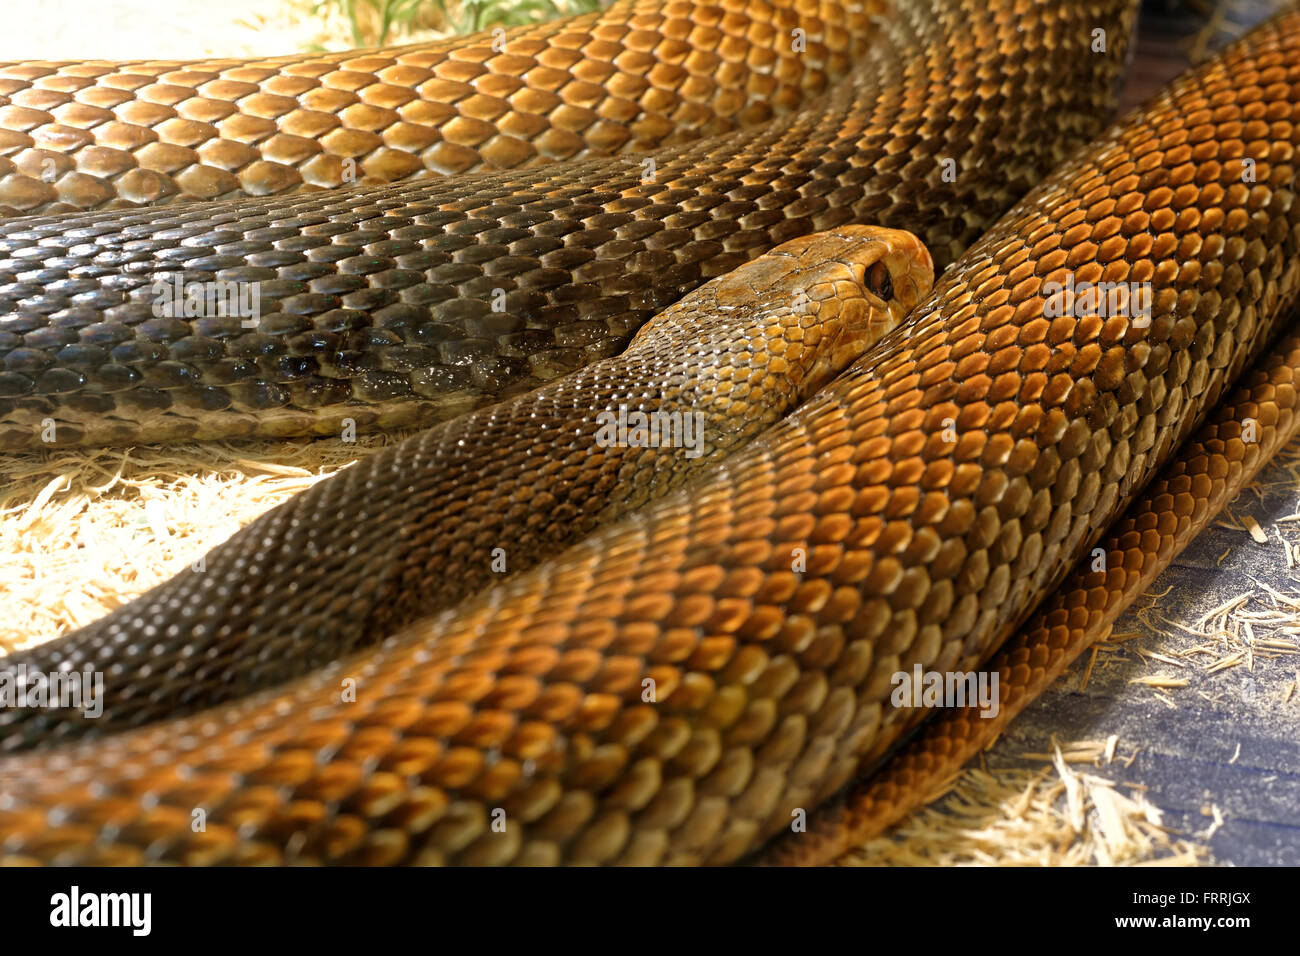 Snake in the terrarium - Coastal taipan Stock Photo